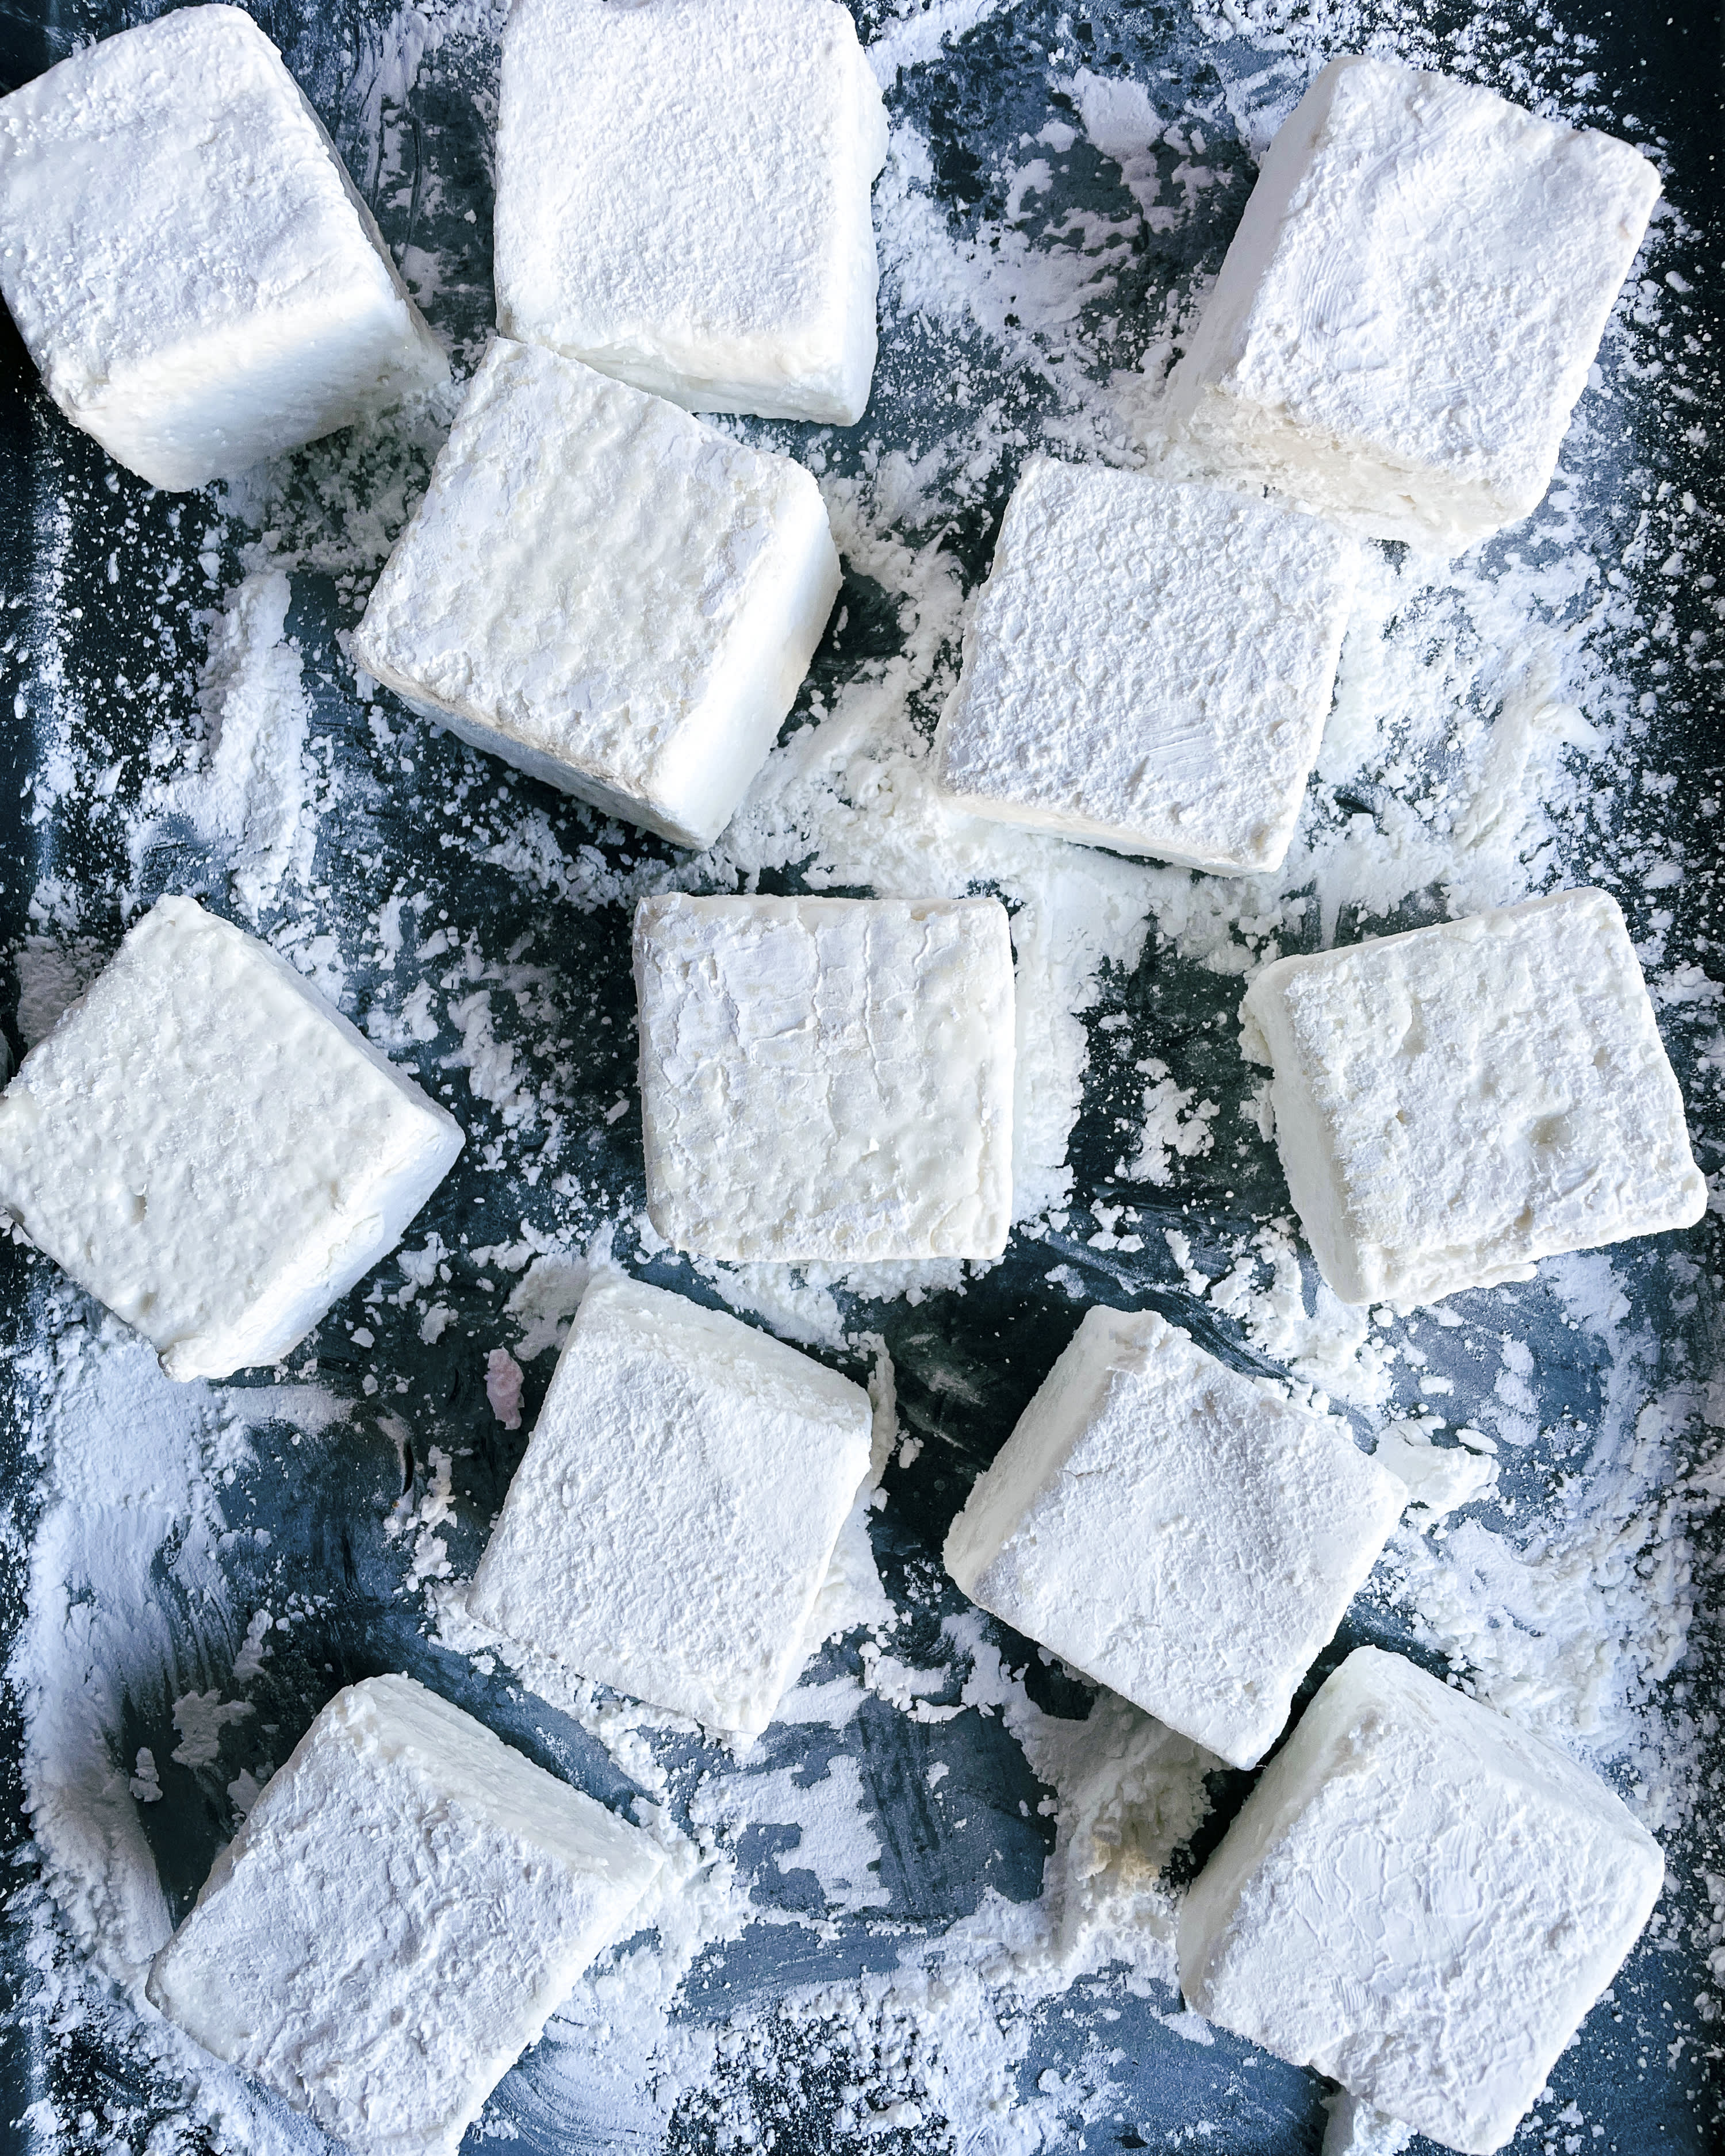 Vegan Marshmallow Recipe - Addicted to Dates